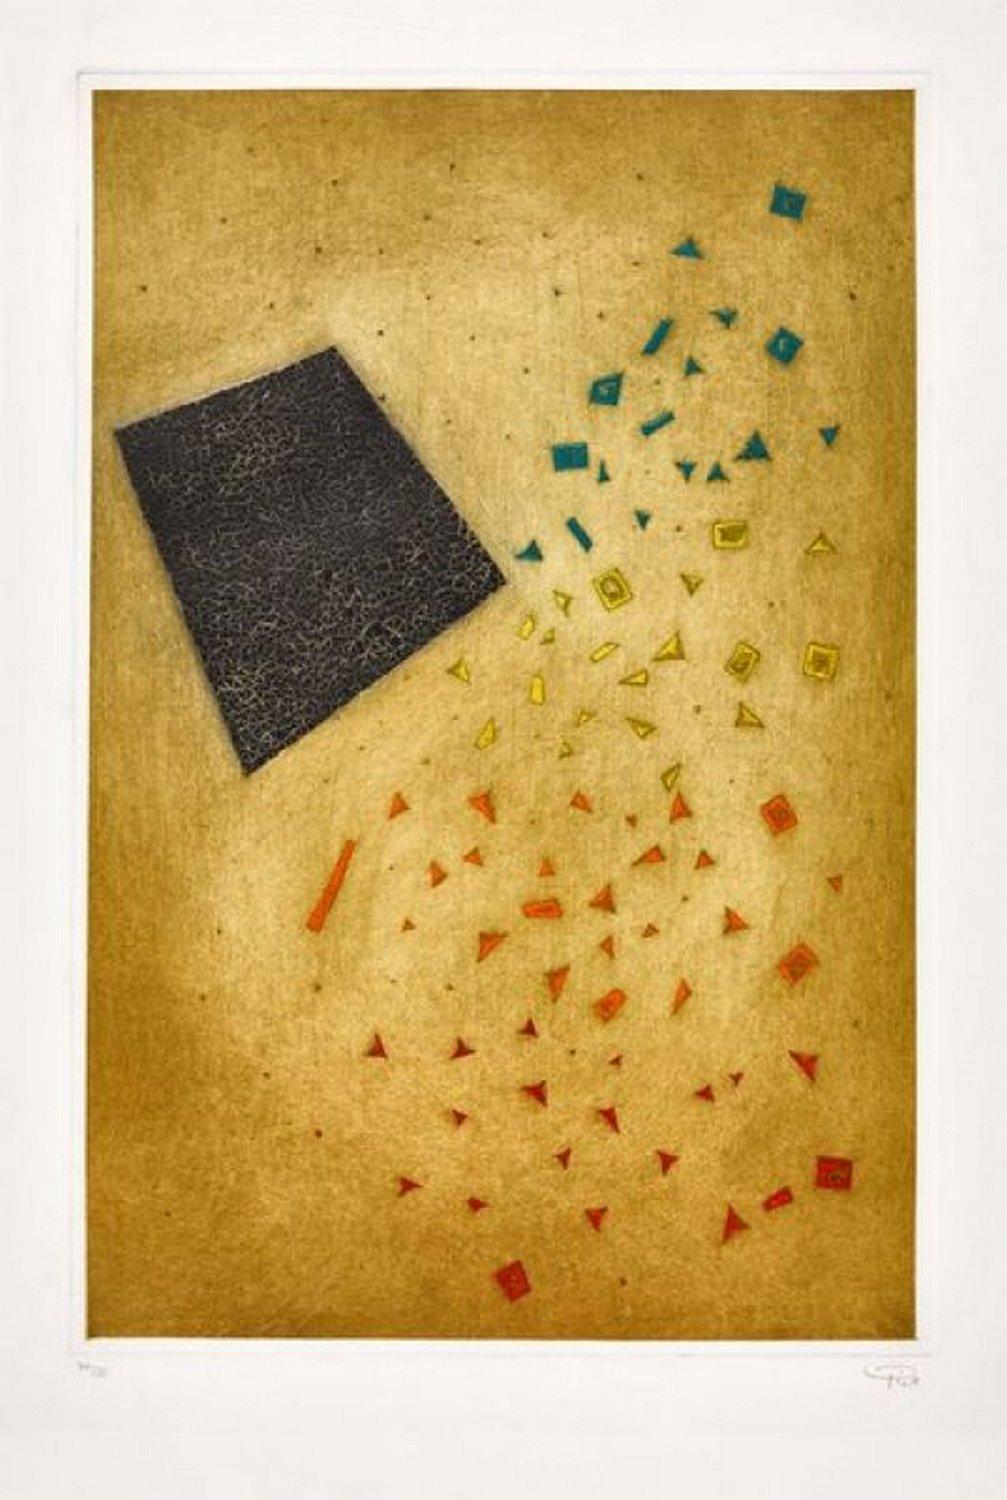 Arthur Luiz Piza Abstract Print - "Inexorable chute" 